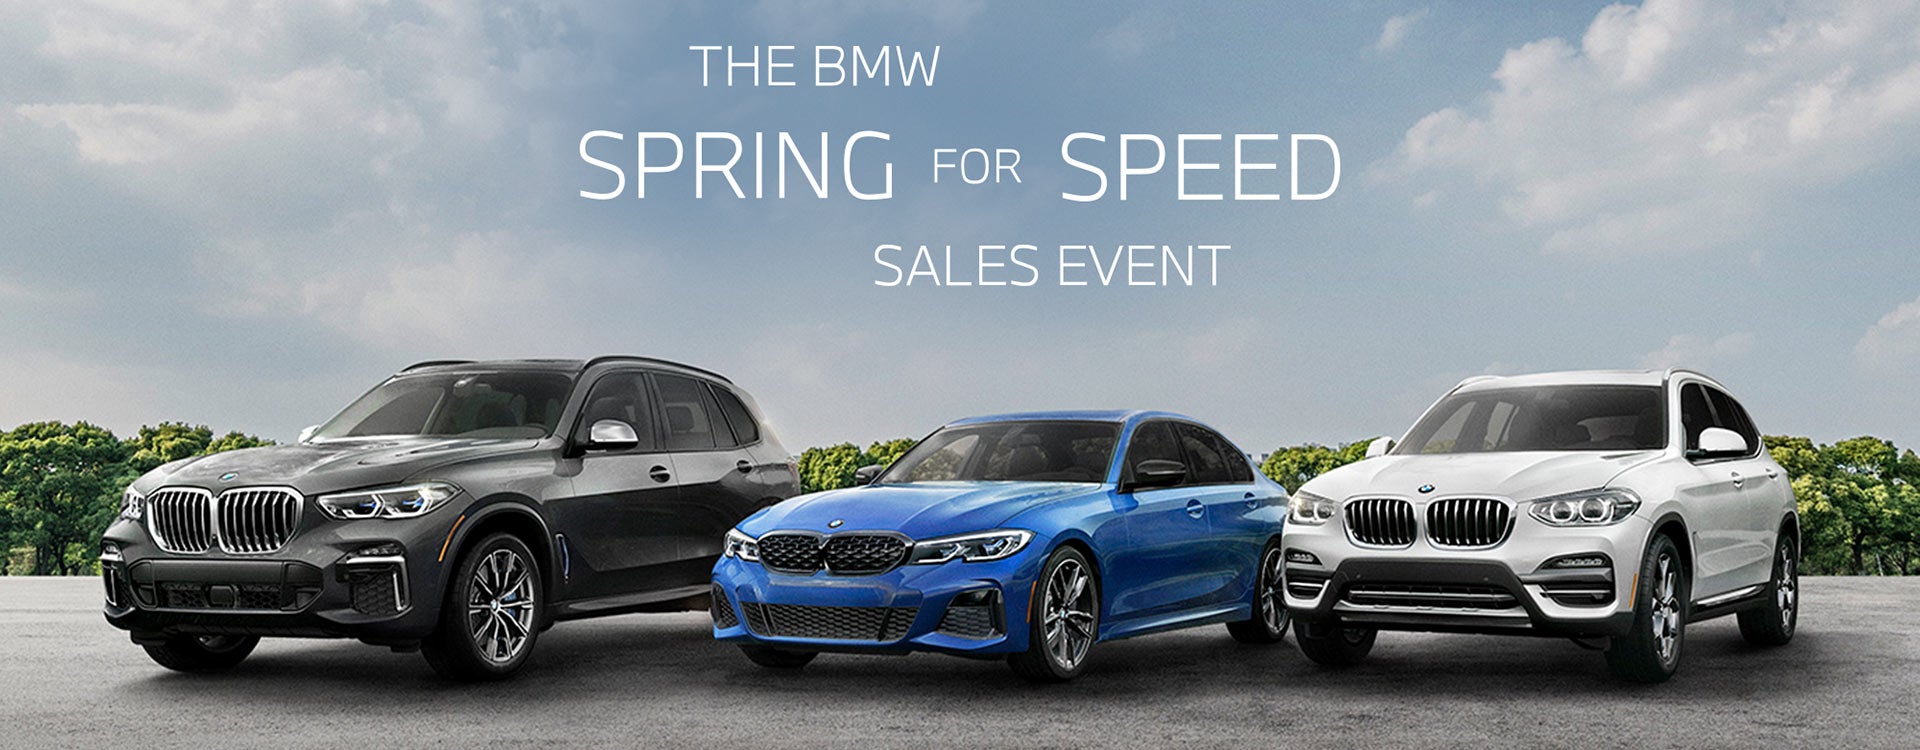 Spring For Speed Sales Event | BMW of Okemos in Okemos MI